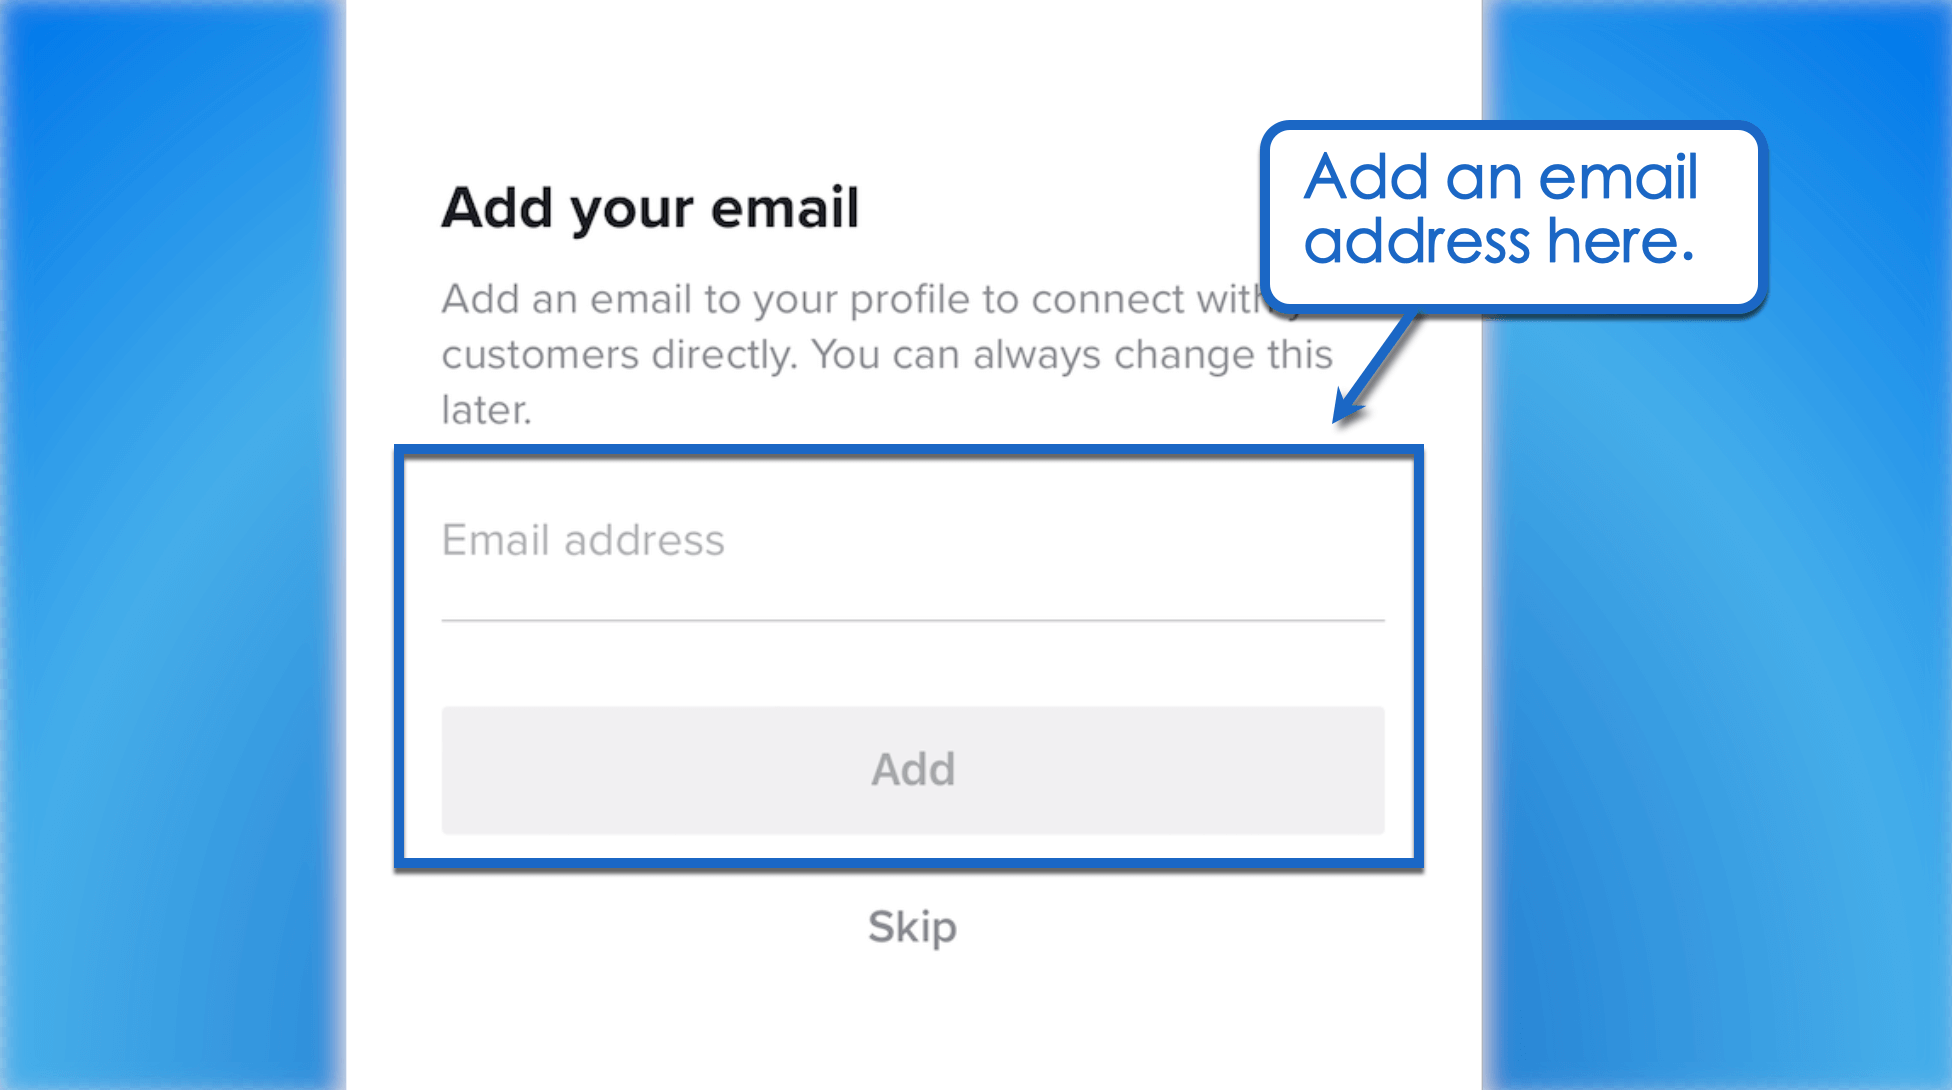 Add an email address.